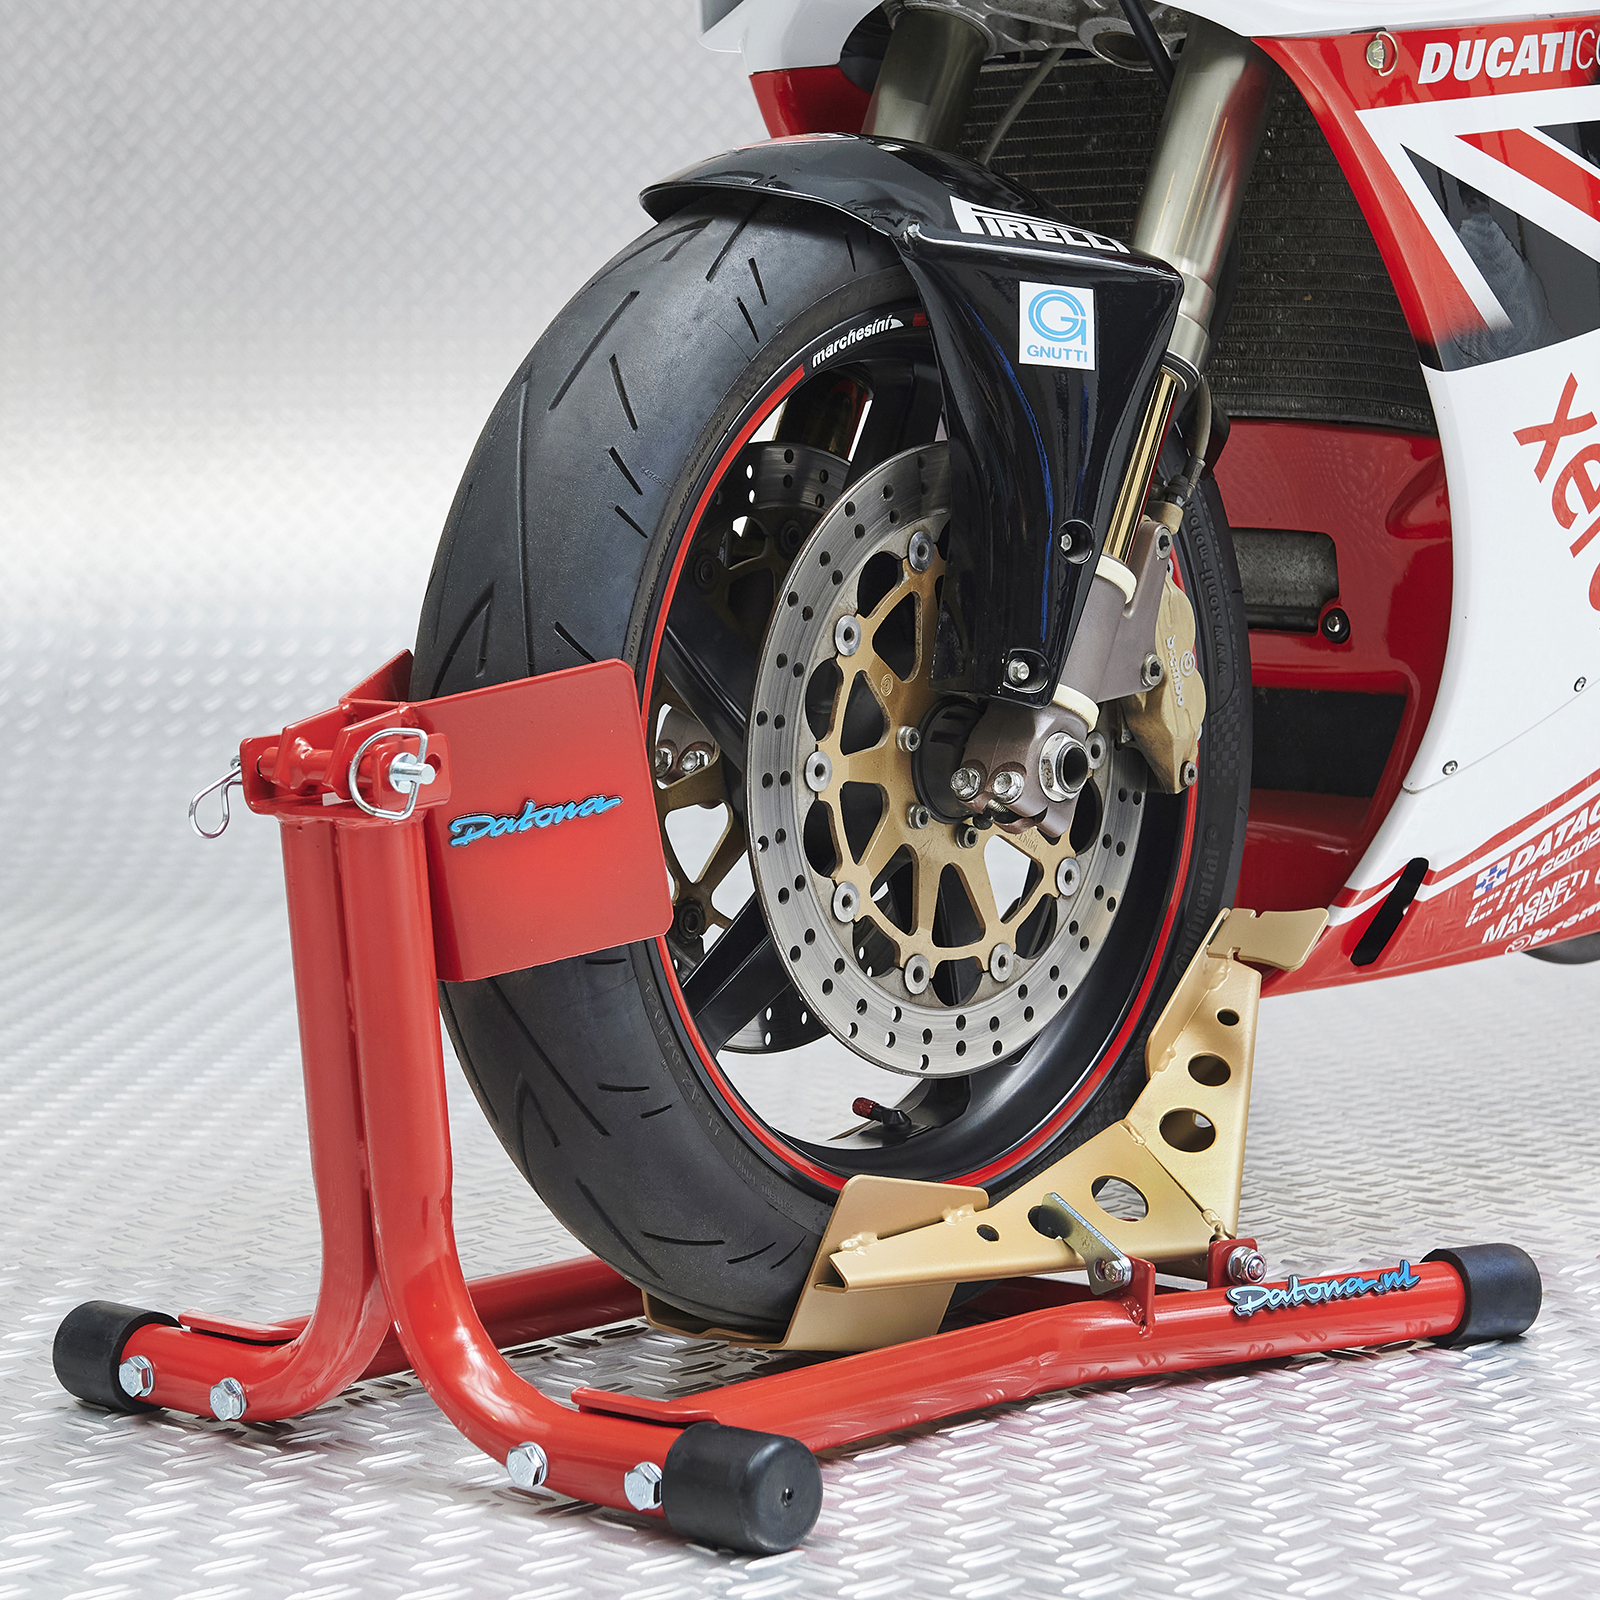 Bloque roue Dafy Moto moto : , support roue de moto